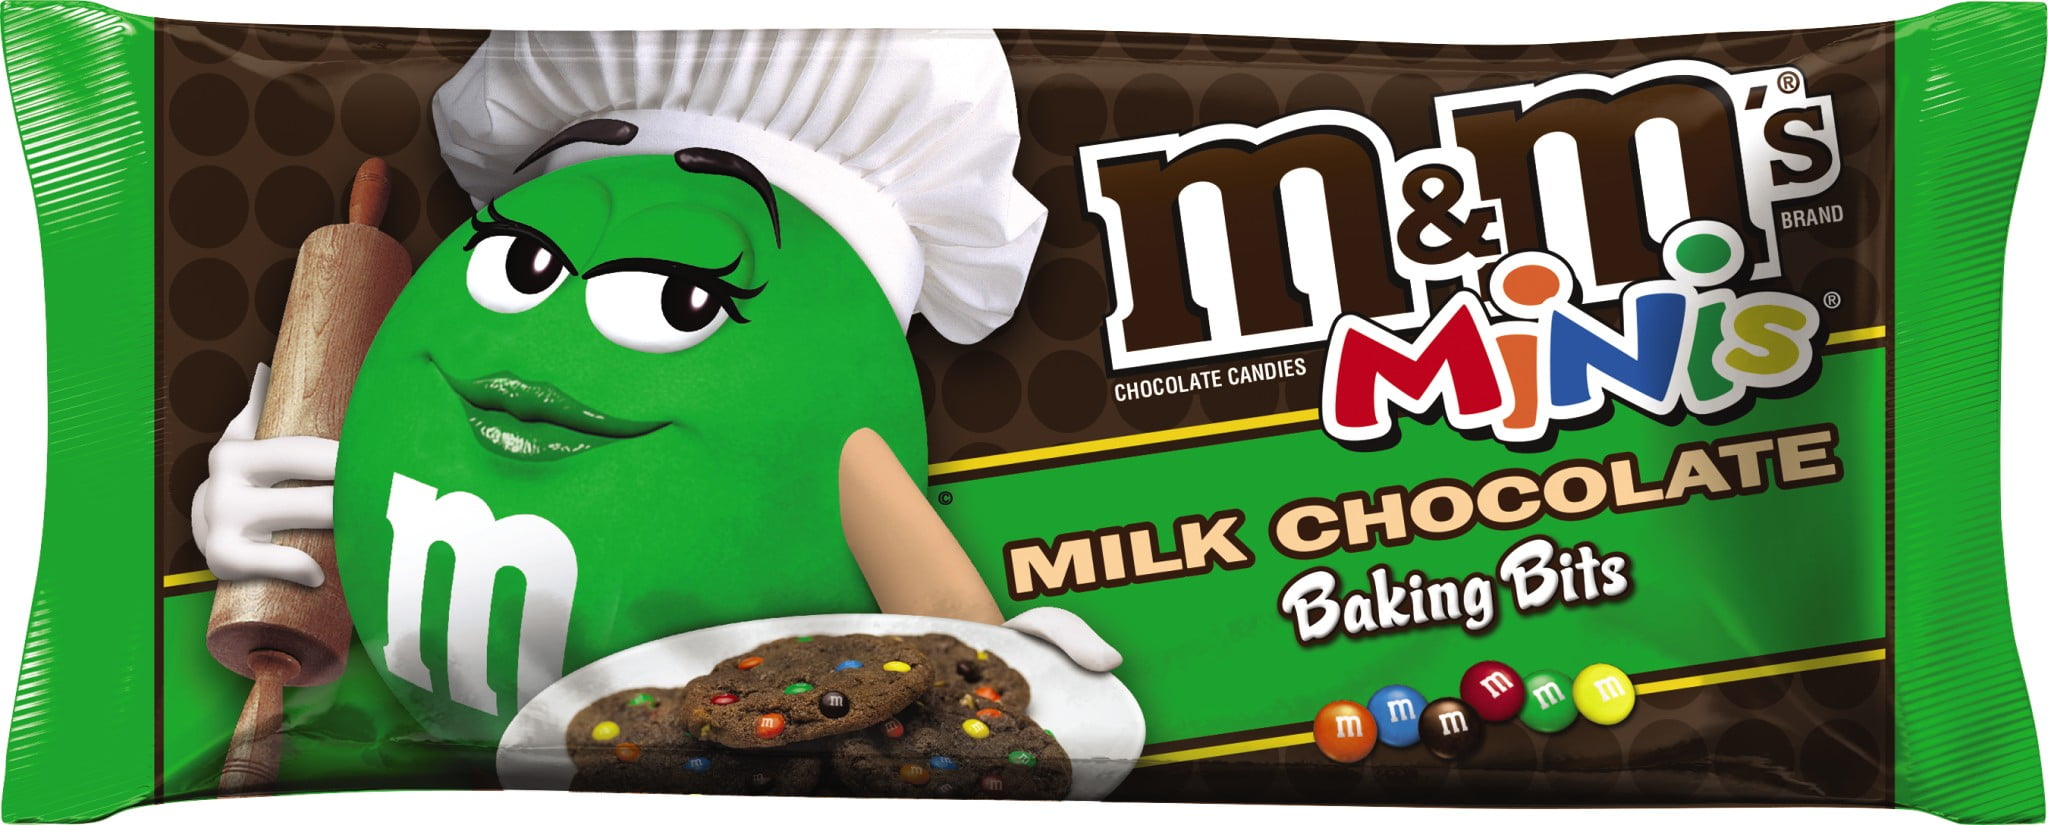 M&M's Mini Holiday Baking Bits 11oz Bag